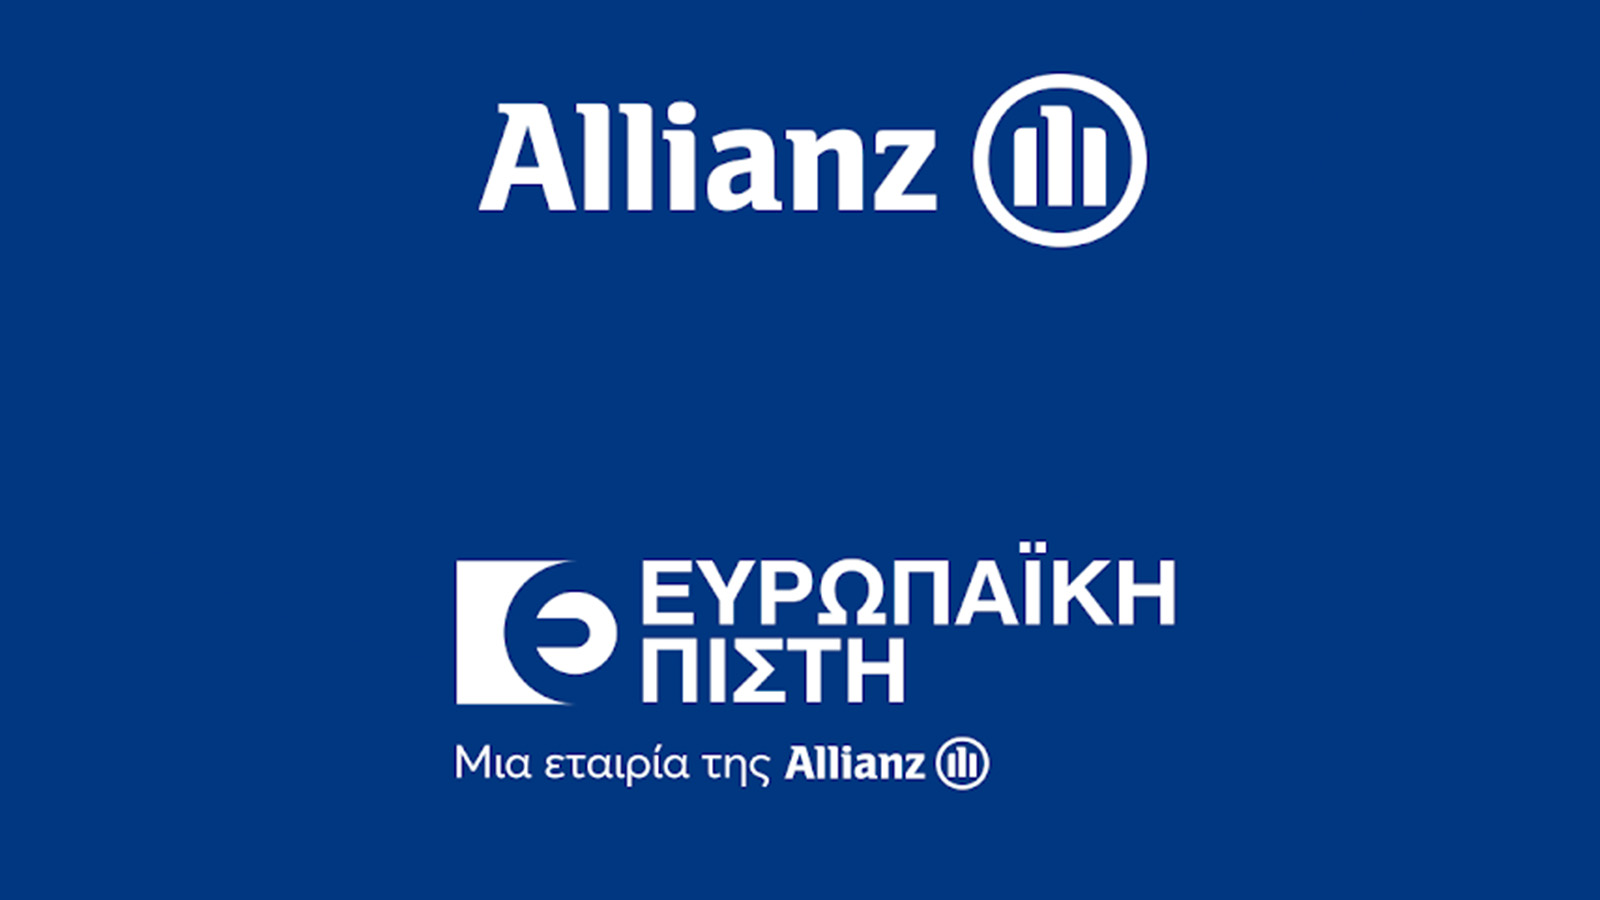 Allianz Ελλάδος και Ευρωπαϊκή Πίστη ενώνονται νομικά